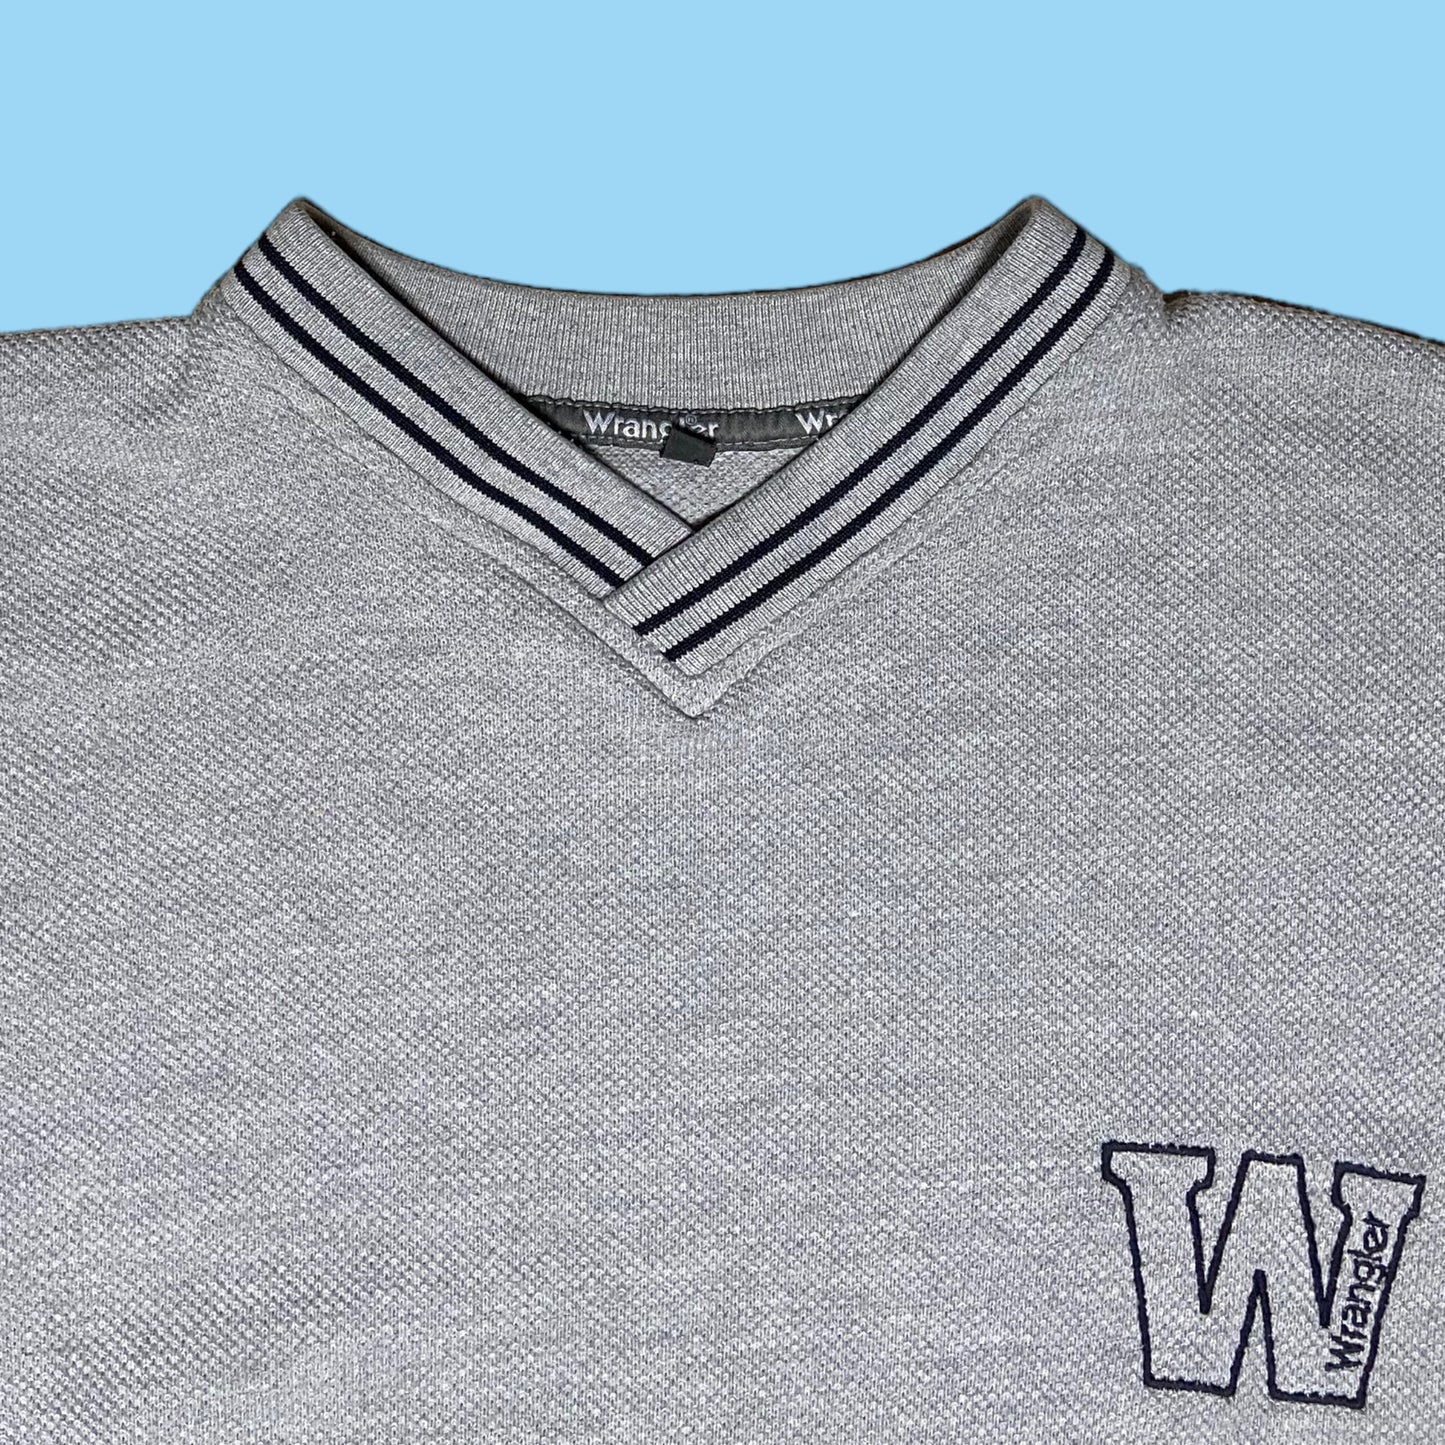 Vintage Wrangler sweater - M